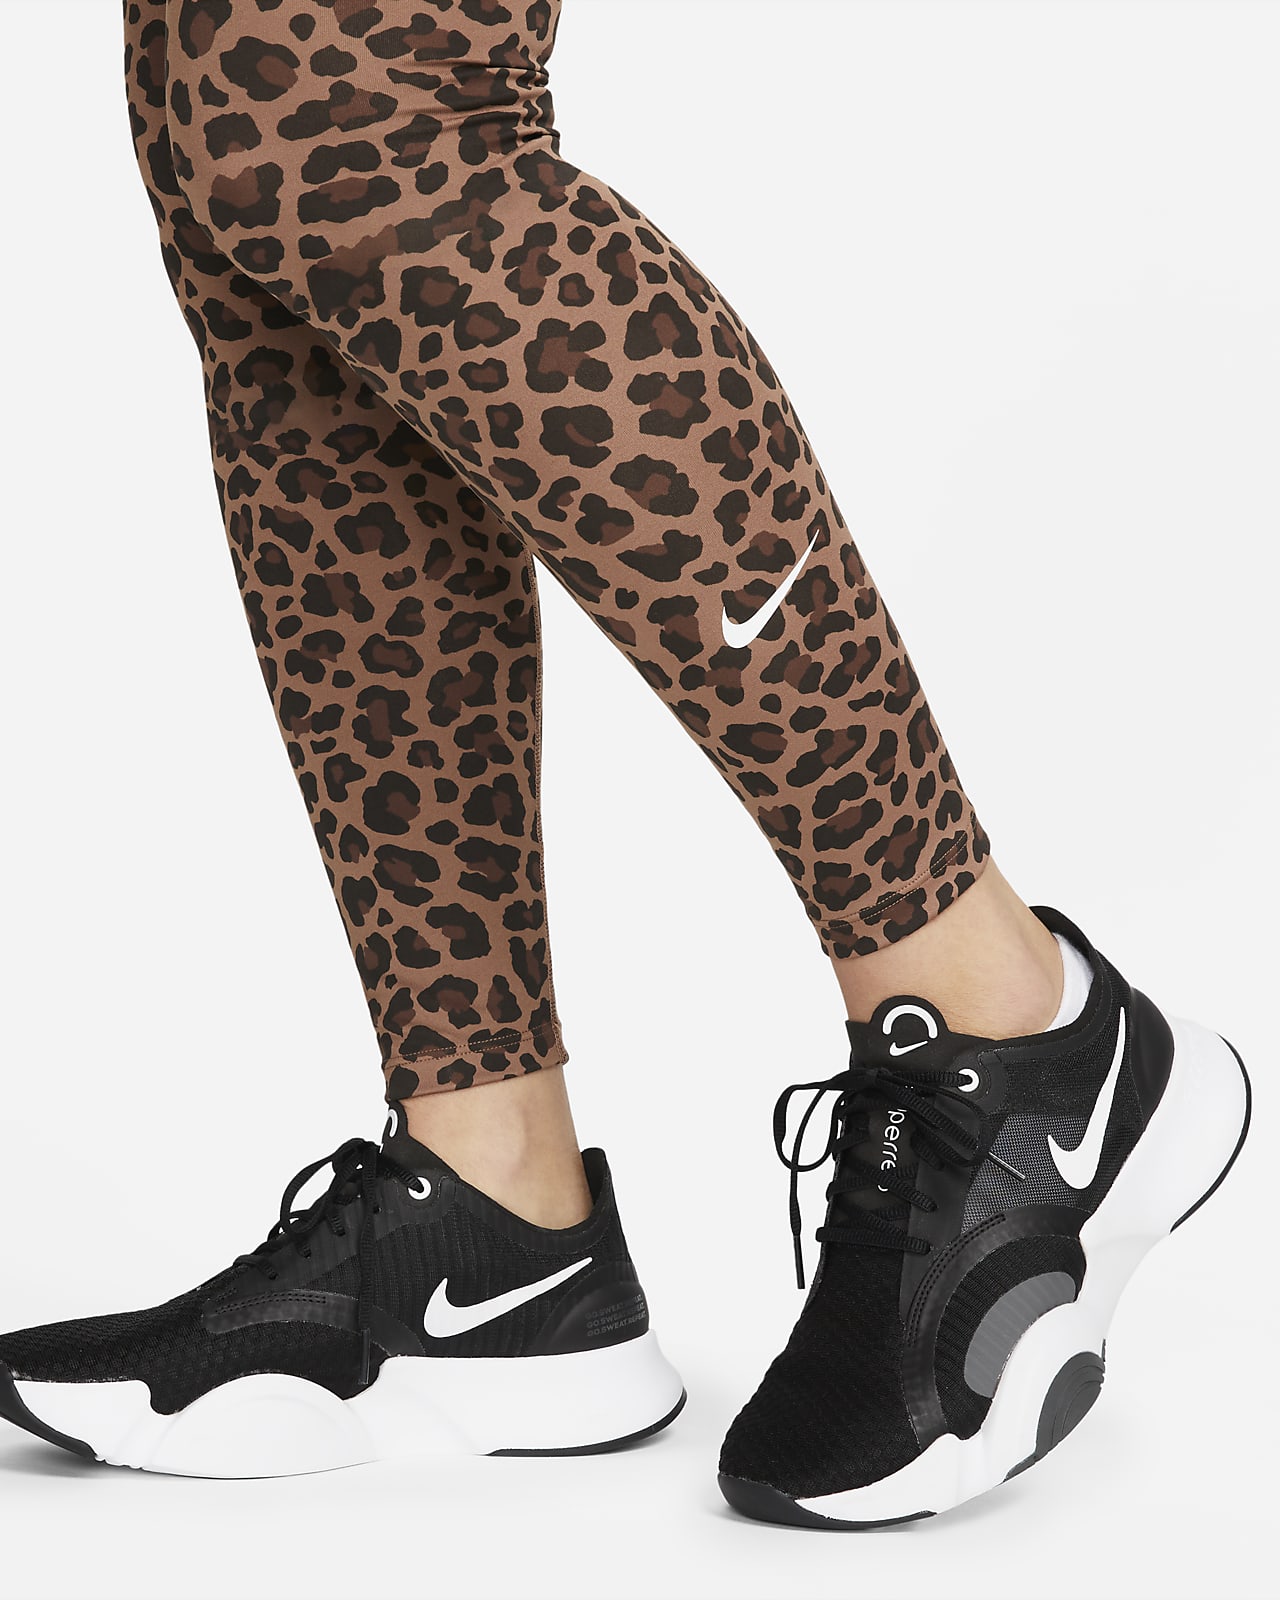 Nike One (M) Leggings de talle con estampado de leopardo - Mujer (Maternity). Nike